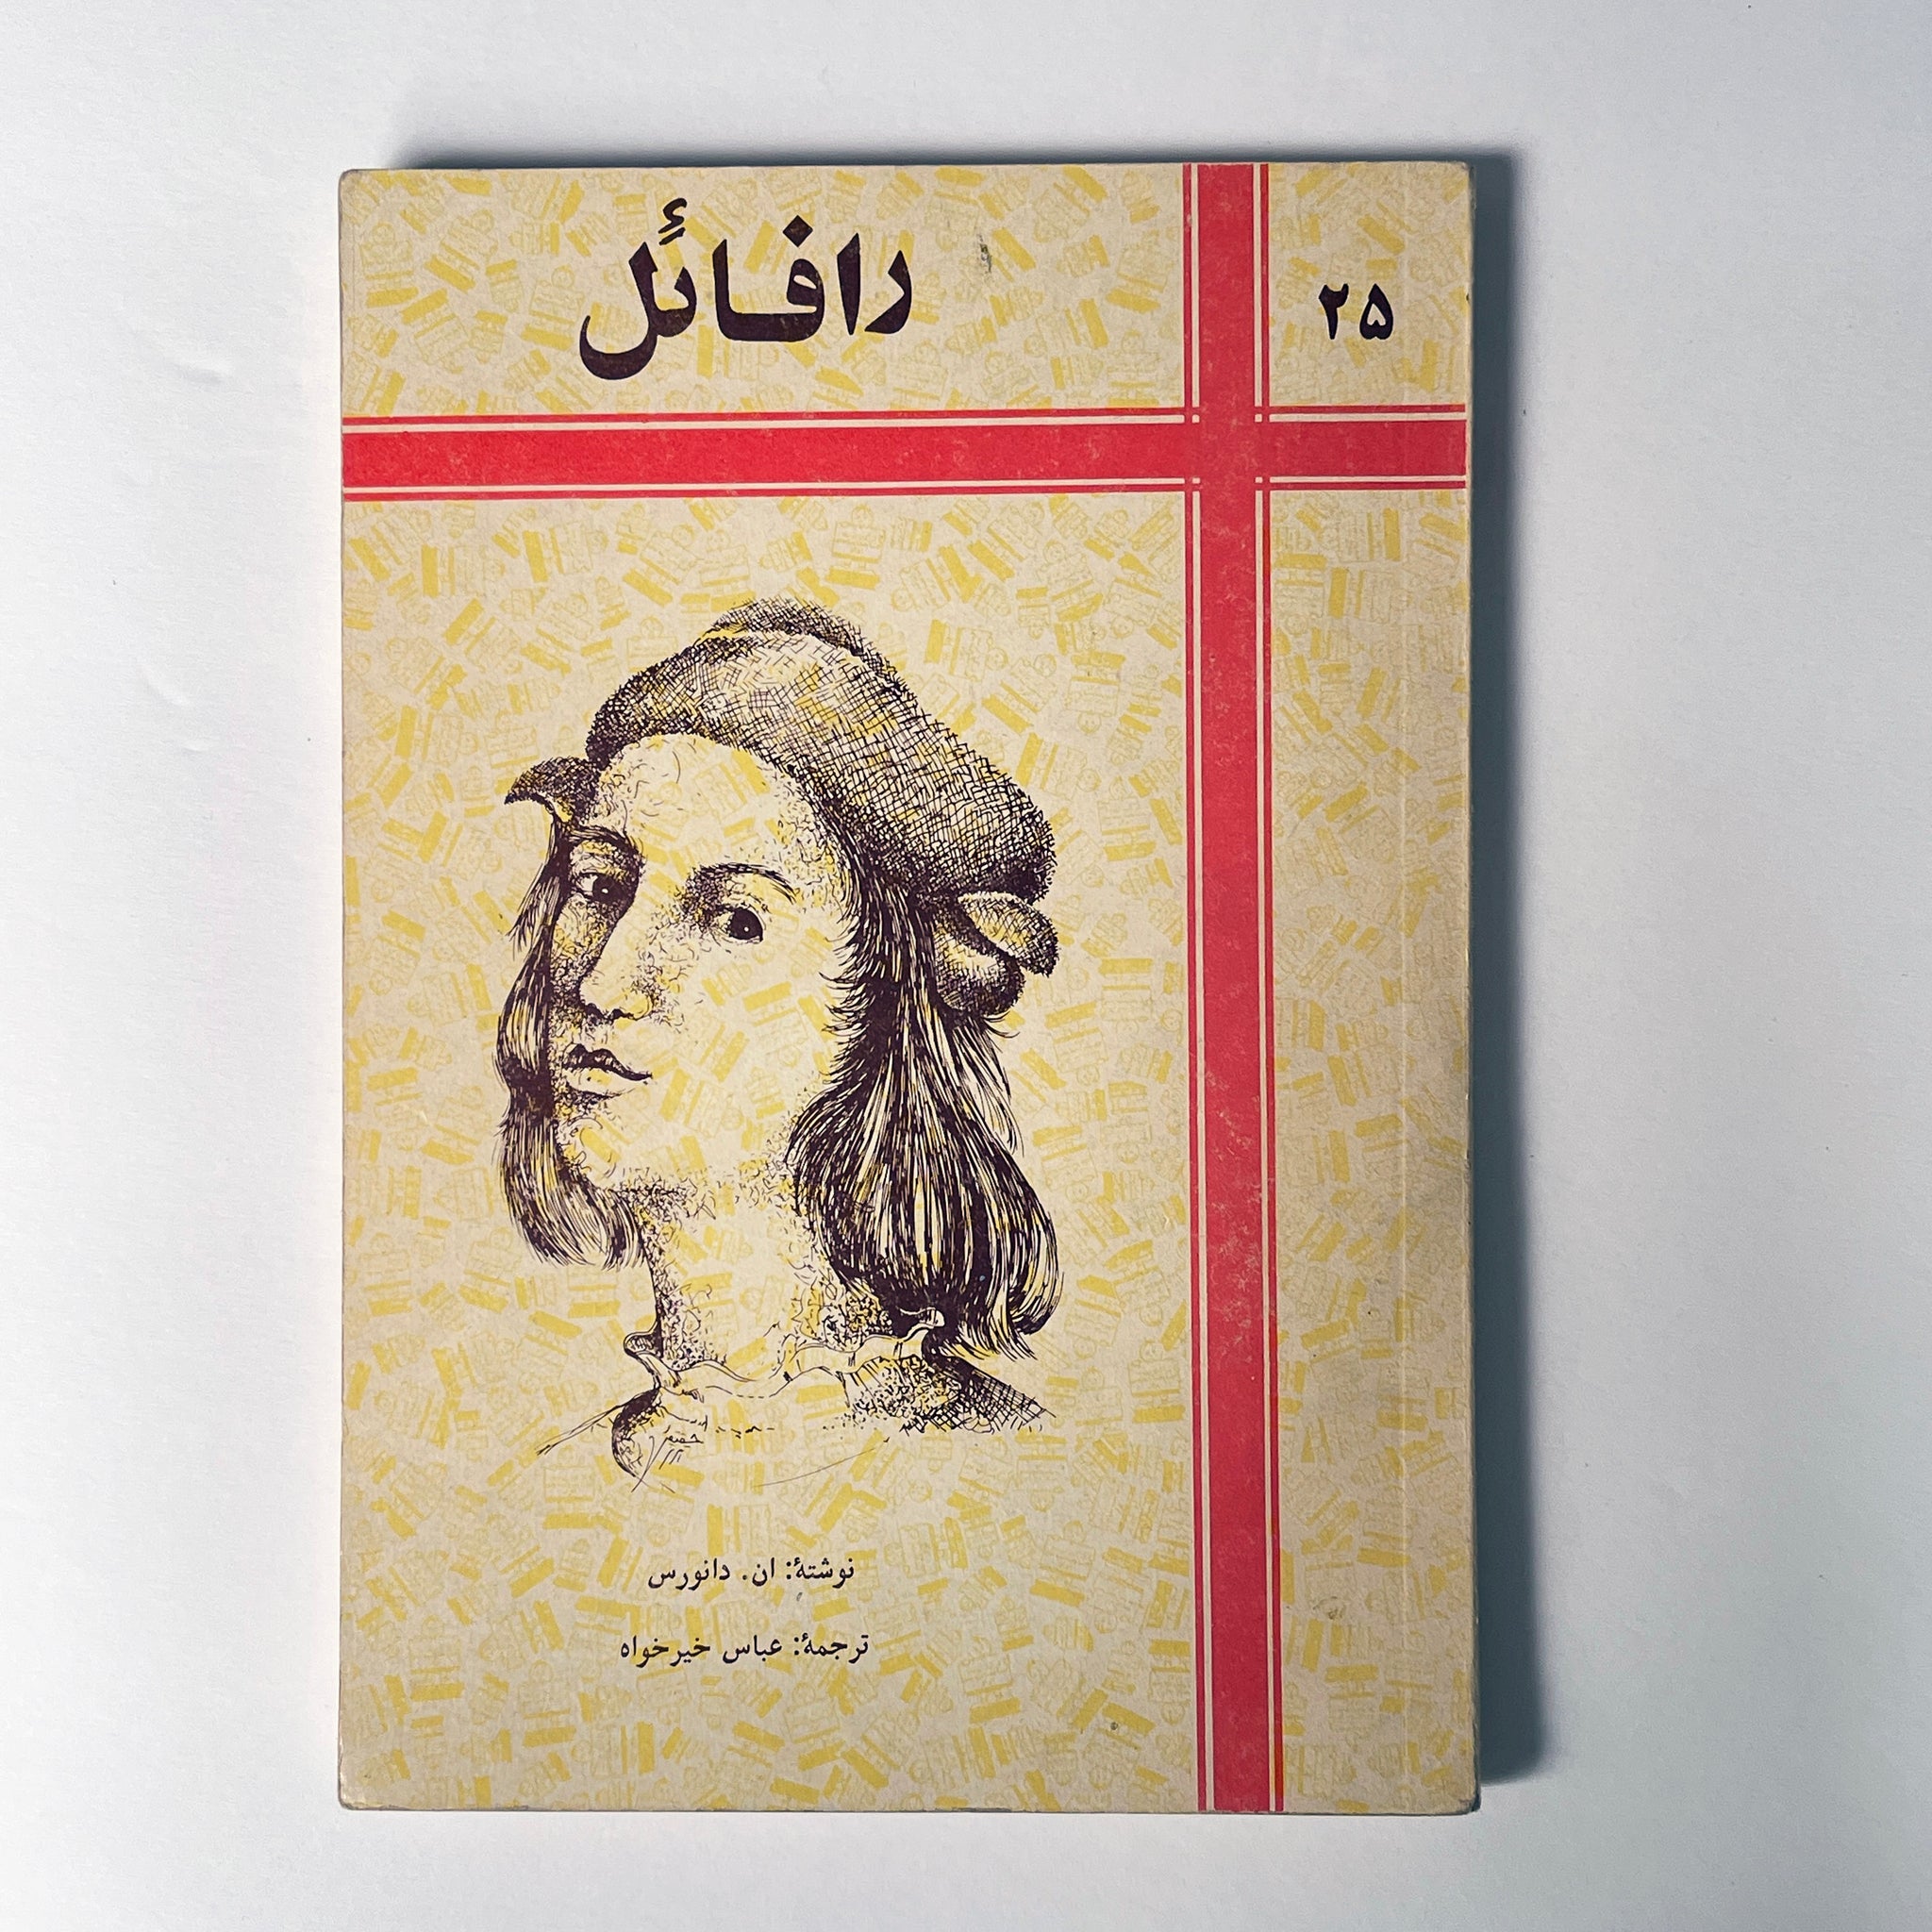 Rafael - A Novel by N. Danors - Farsi Language